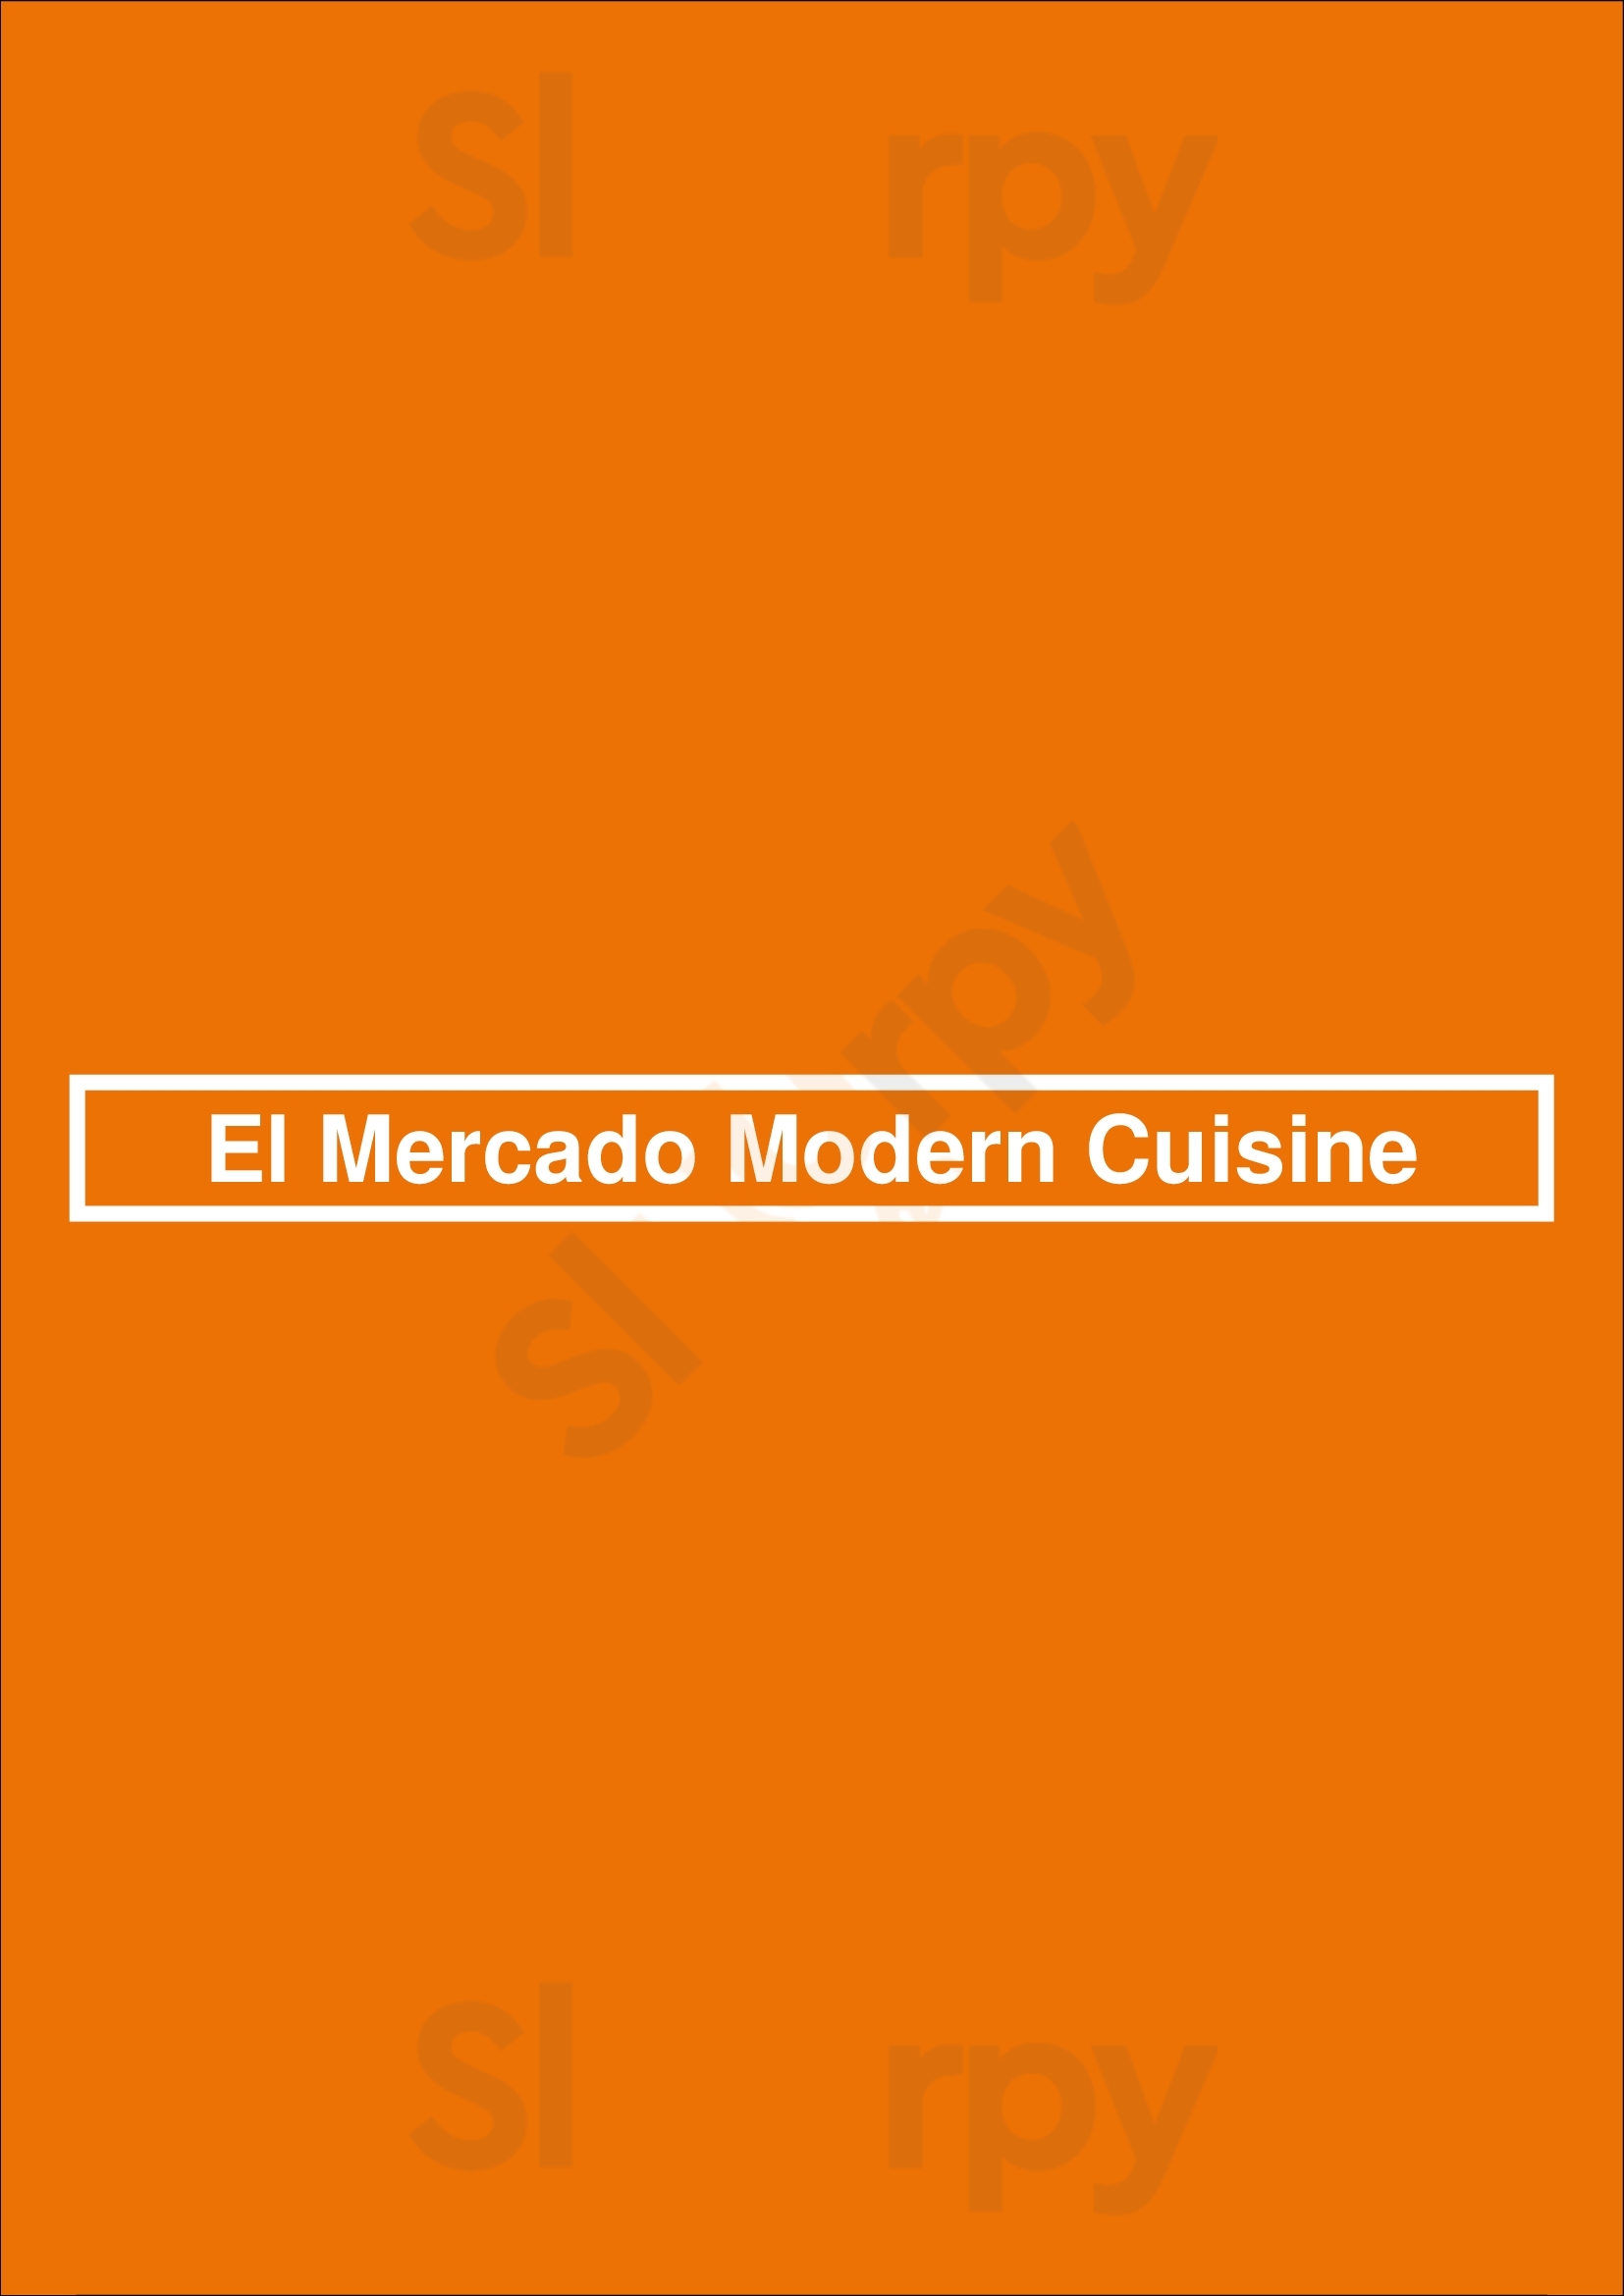 El Mercado Modern Cuisine Santa Ana Menu - 1